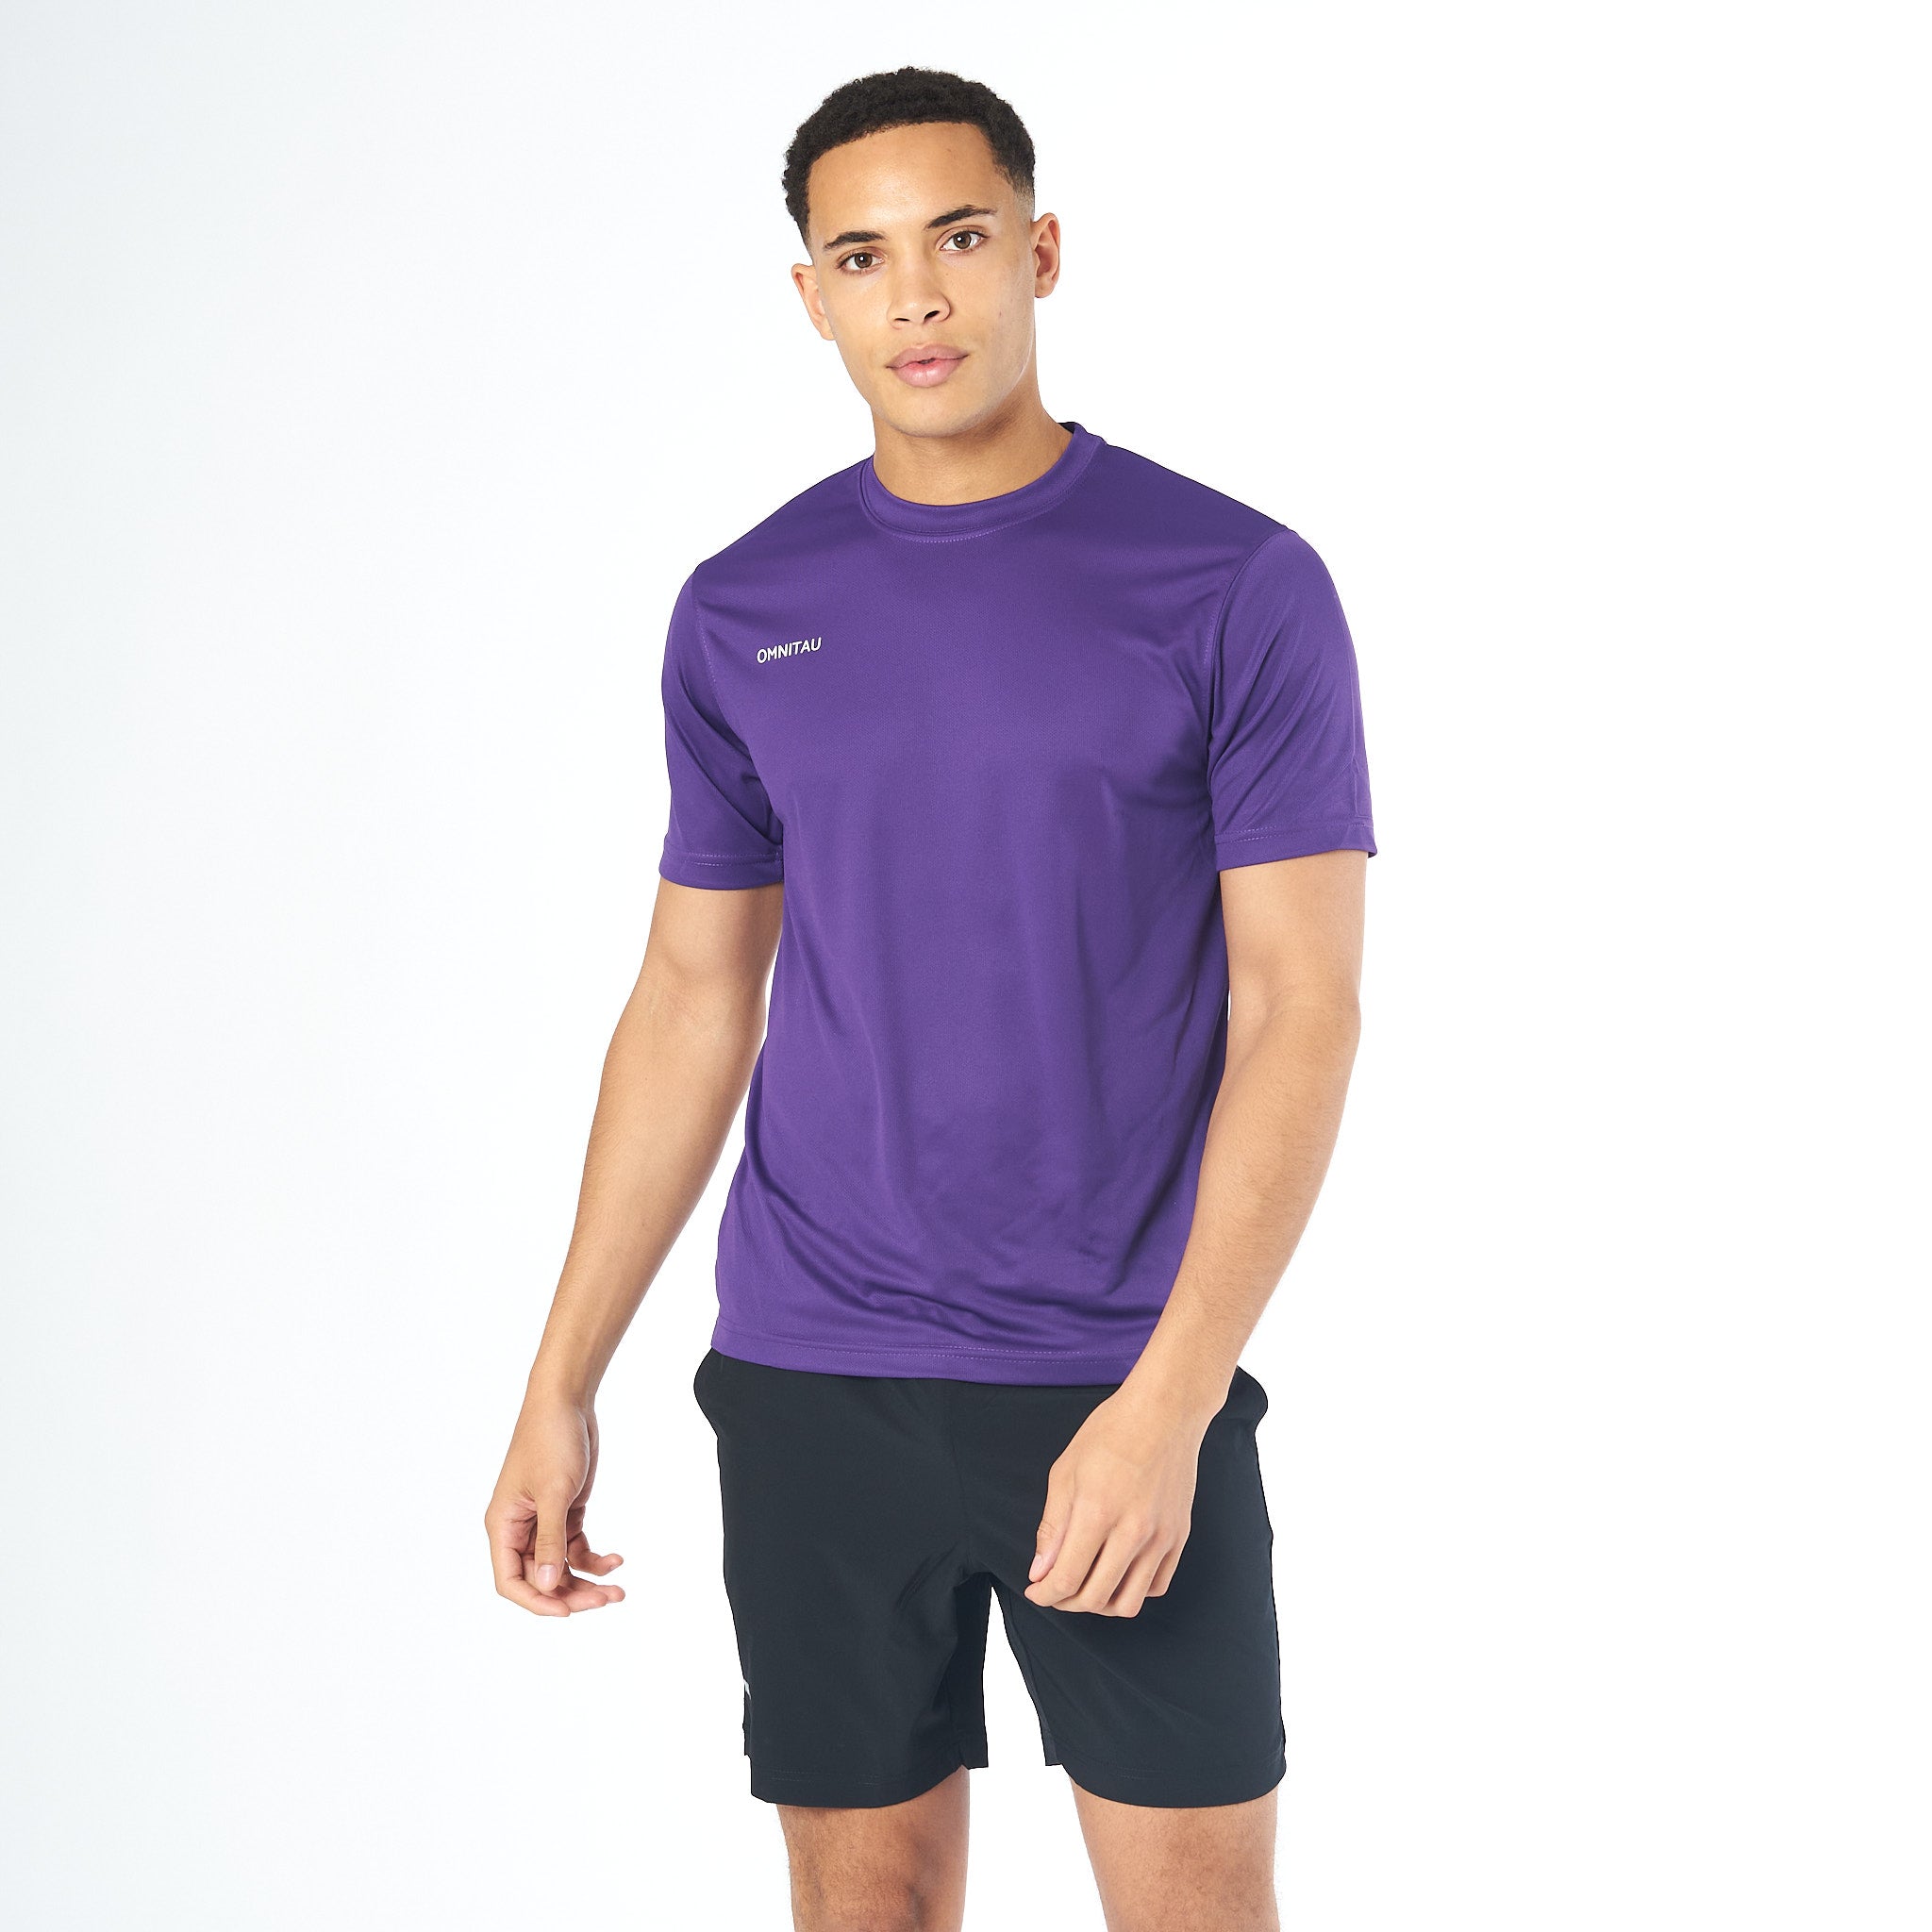 Omnitau Men's Team Sports Breathable Technical T-Shirt - Purple